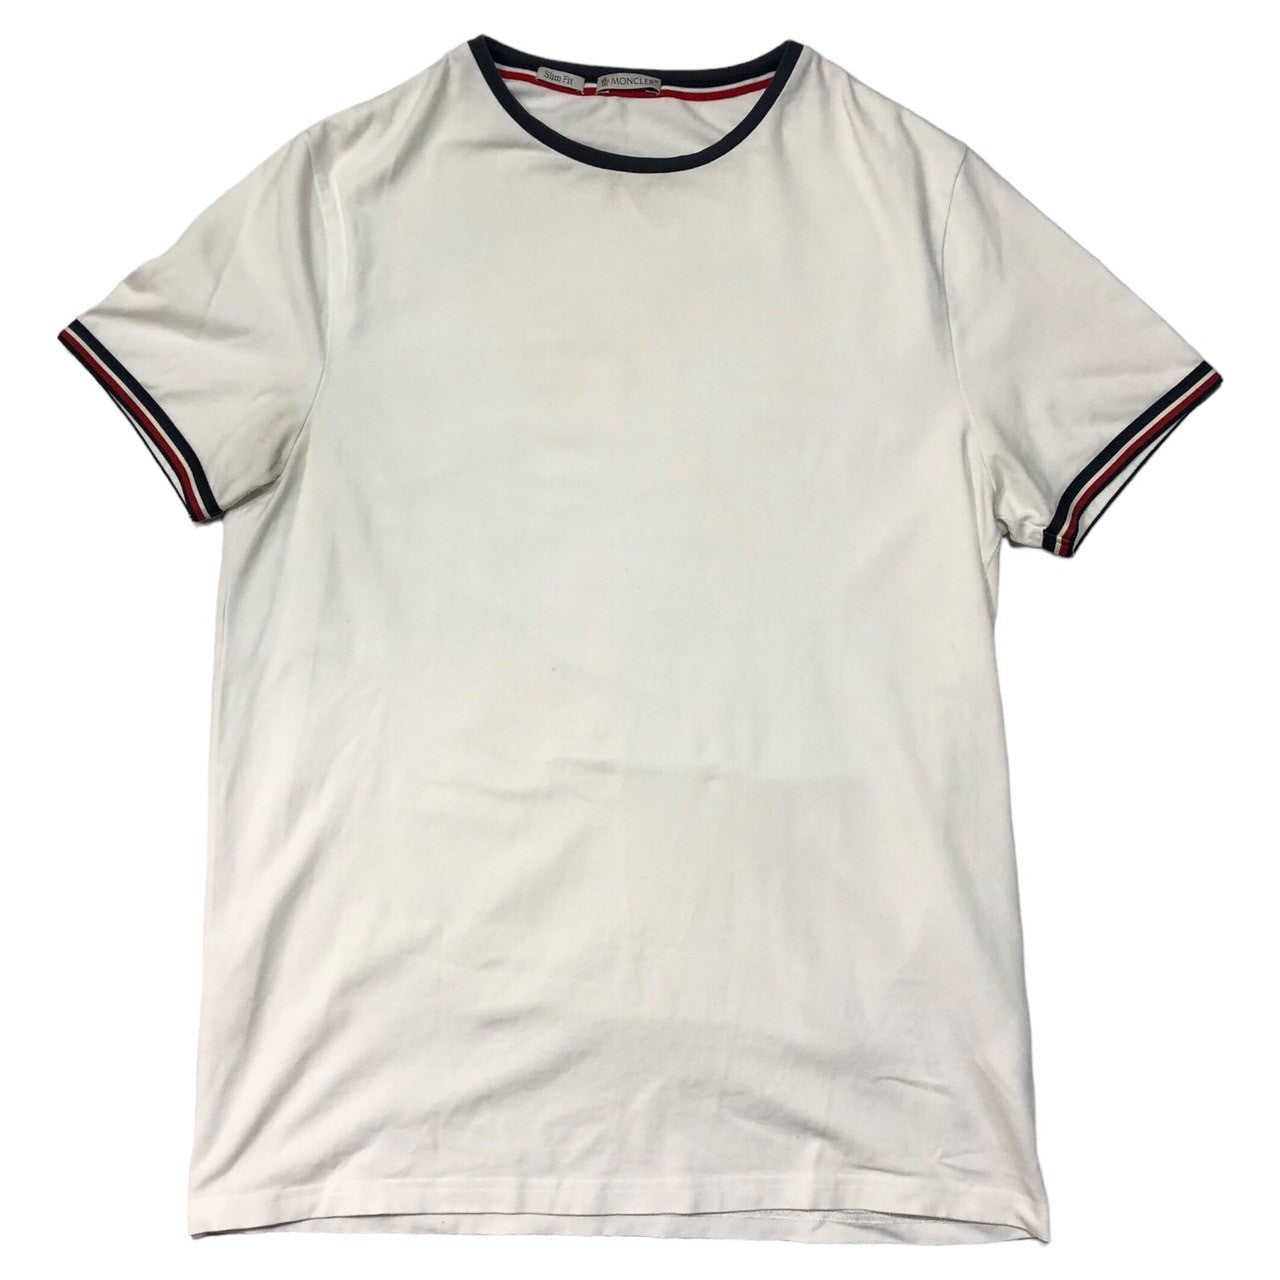 MONCLER(モンクレール) MAGLIA SLIMFIT/ロゴリンガーTシャツ B10918005900 L ホワイト